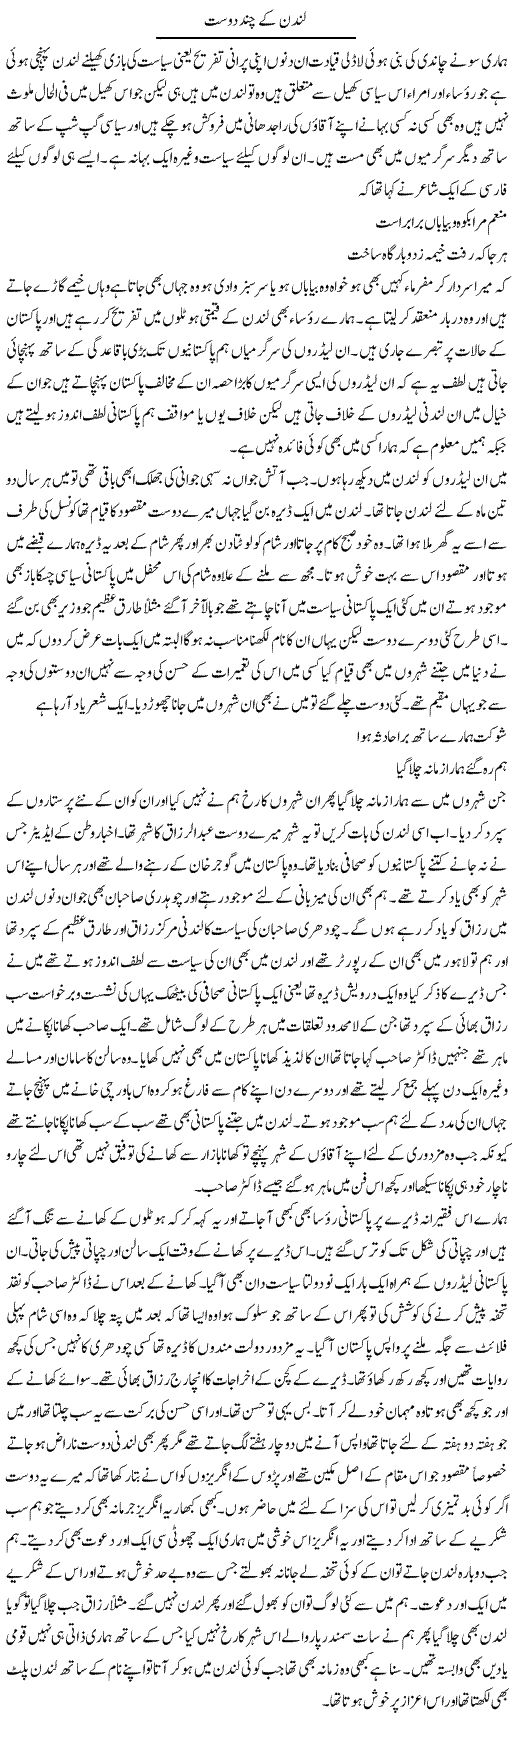 London K Chand Dost | Abdul Qadir Hassan | Daily Urdu Columns